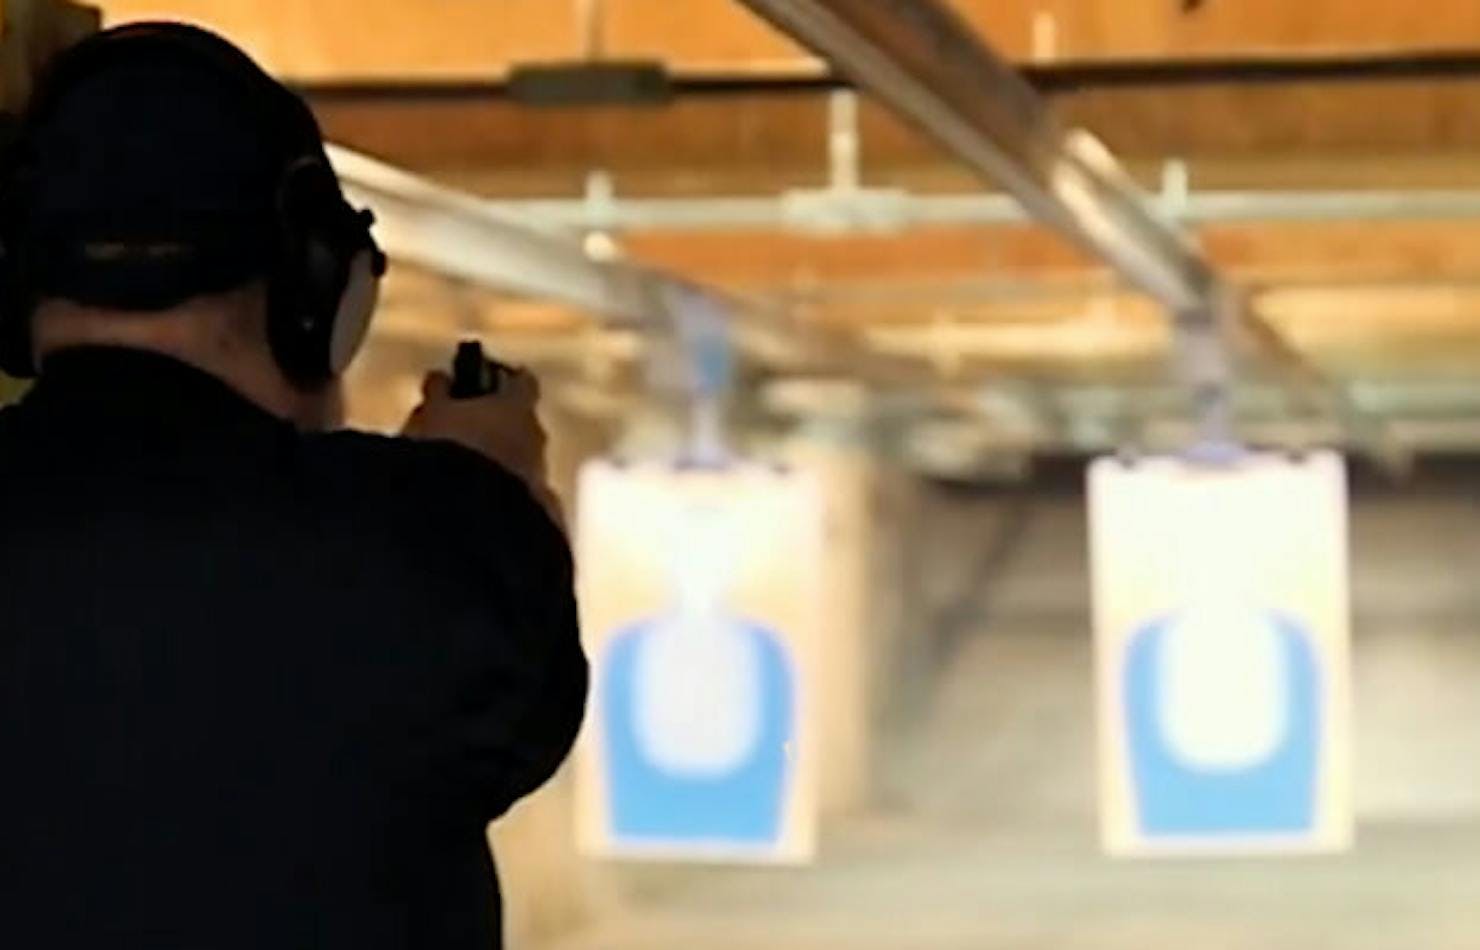 Pistol shooting at the range